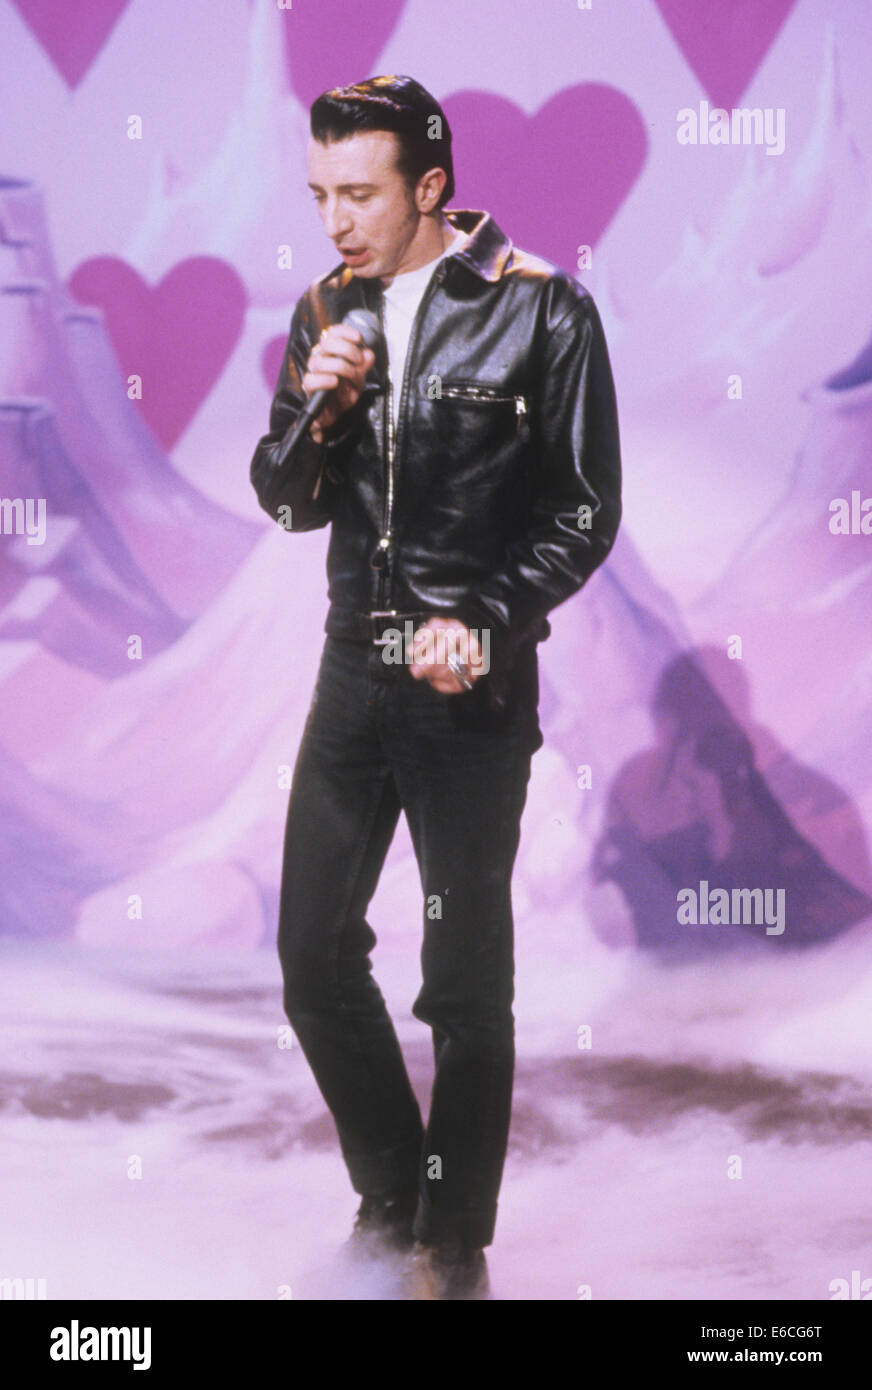 MARC ALMOND UK cantante pop in 1988 Foto Stock